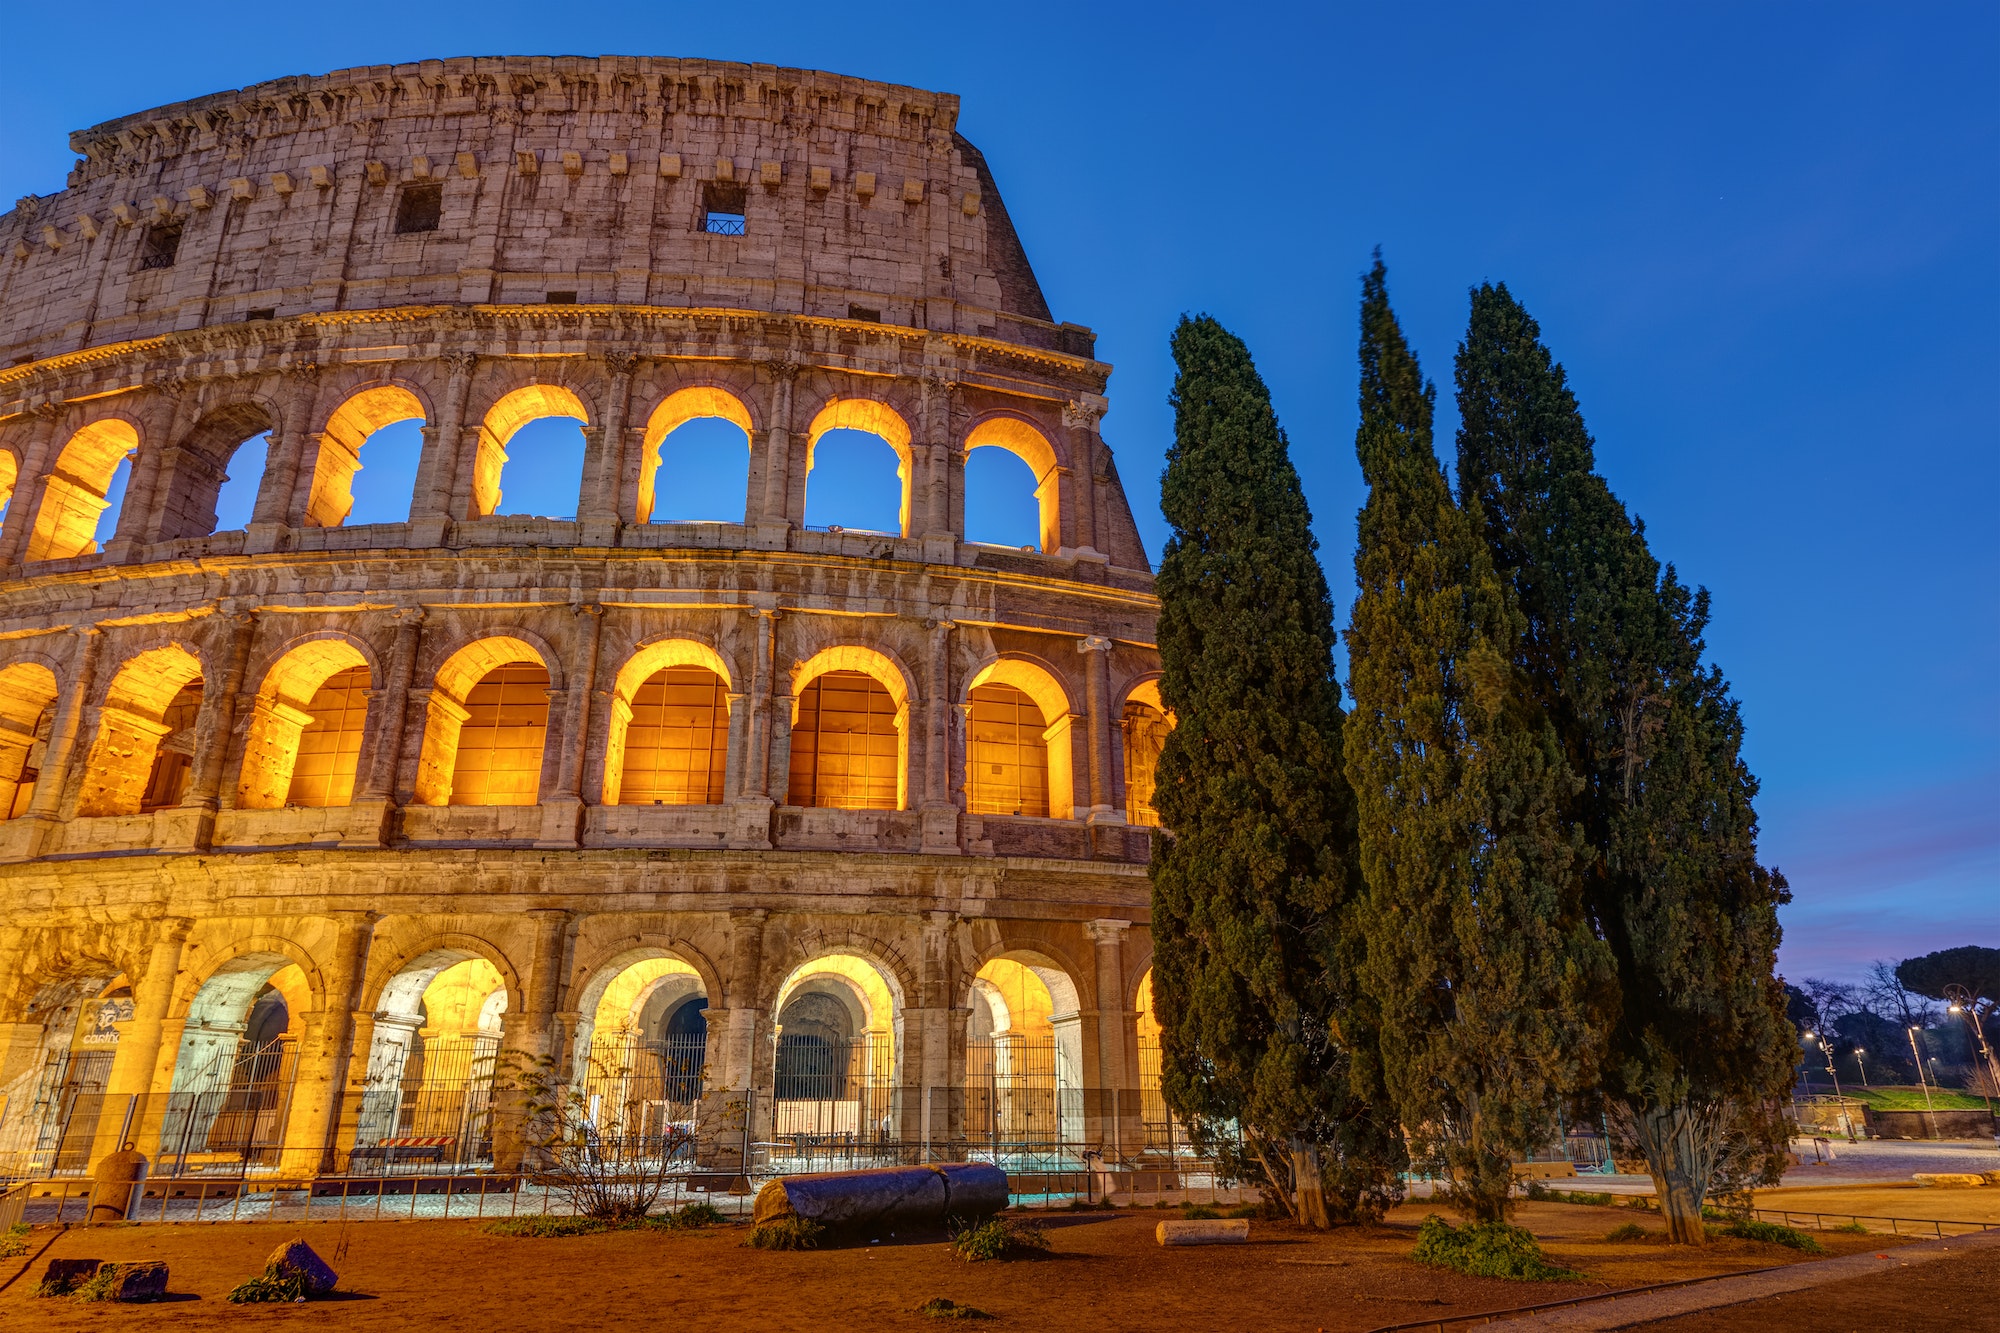 the-illuminated-colosseum-in-rome